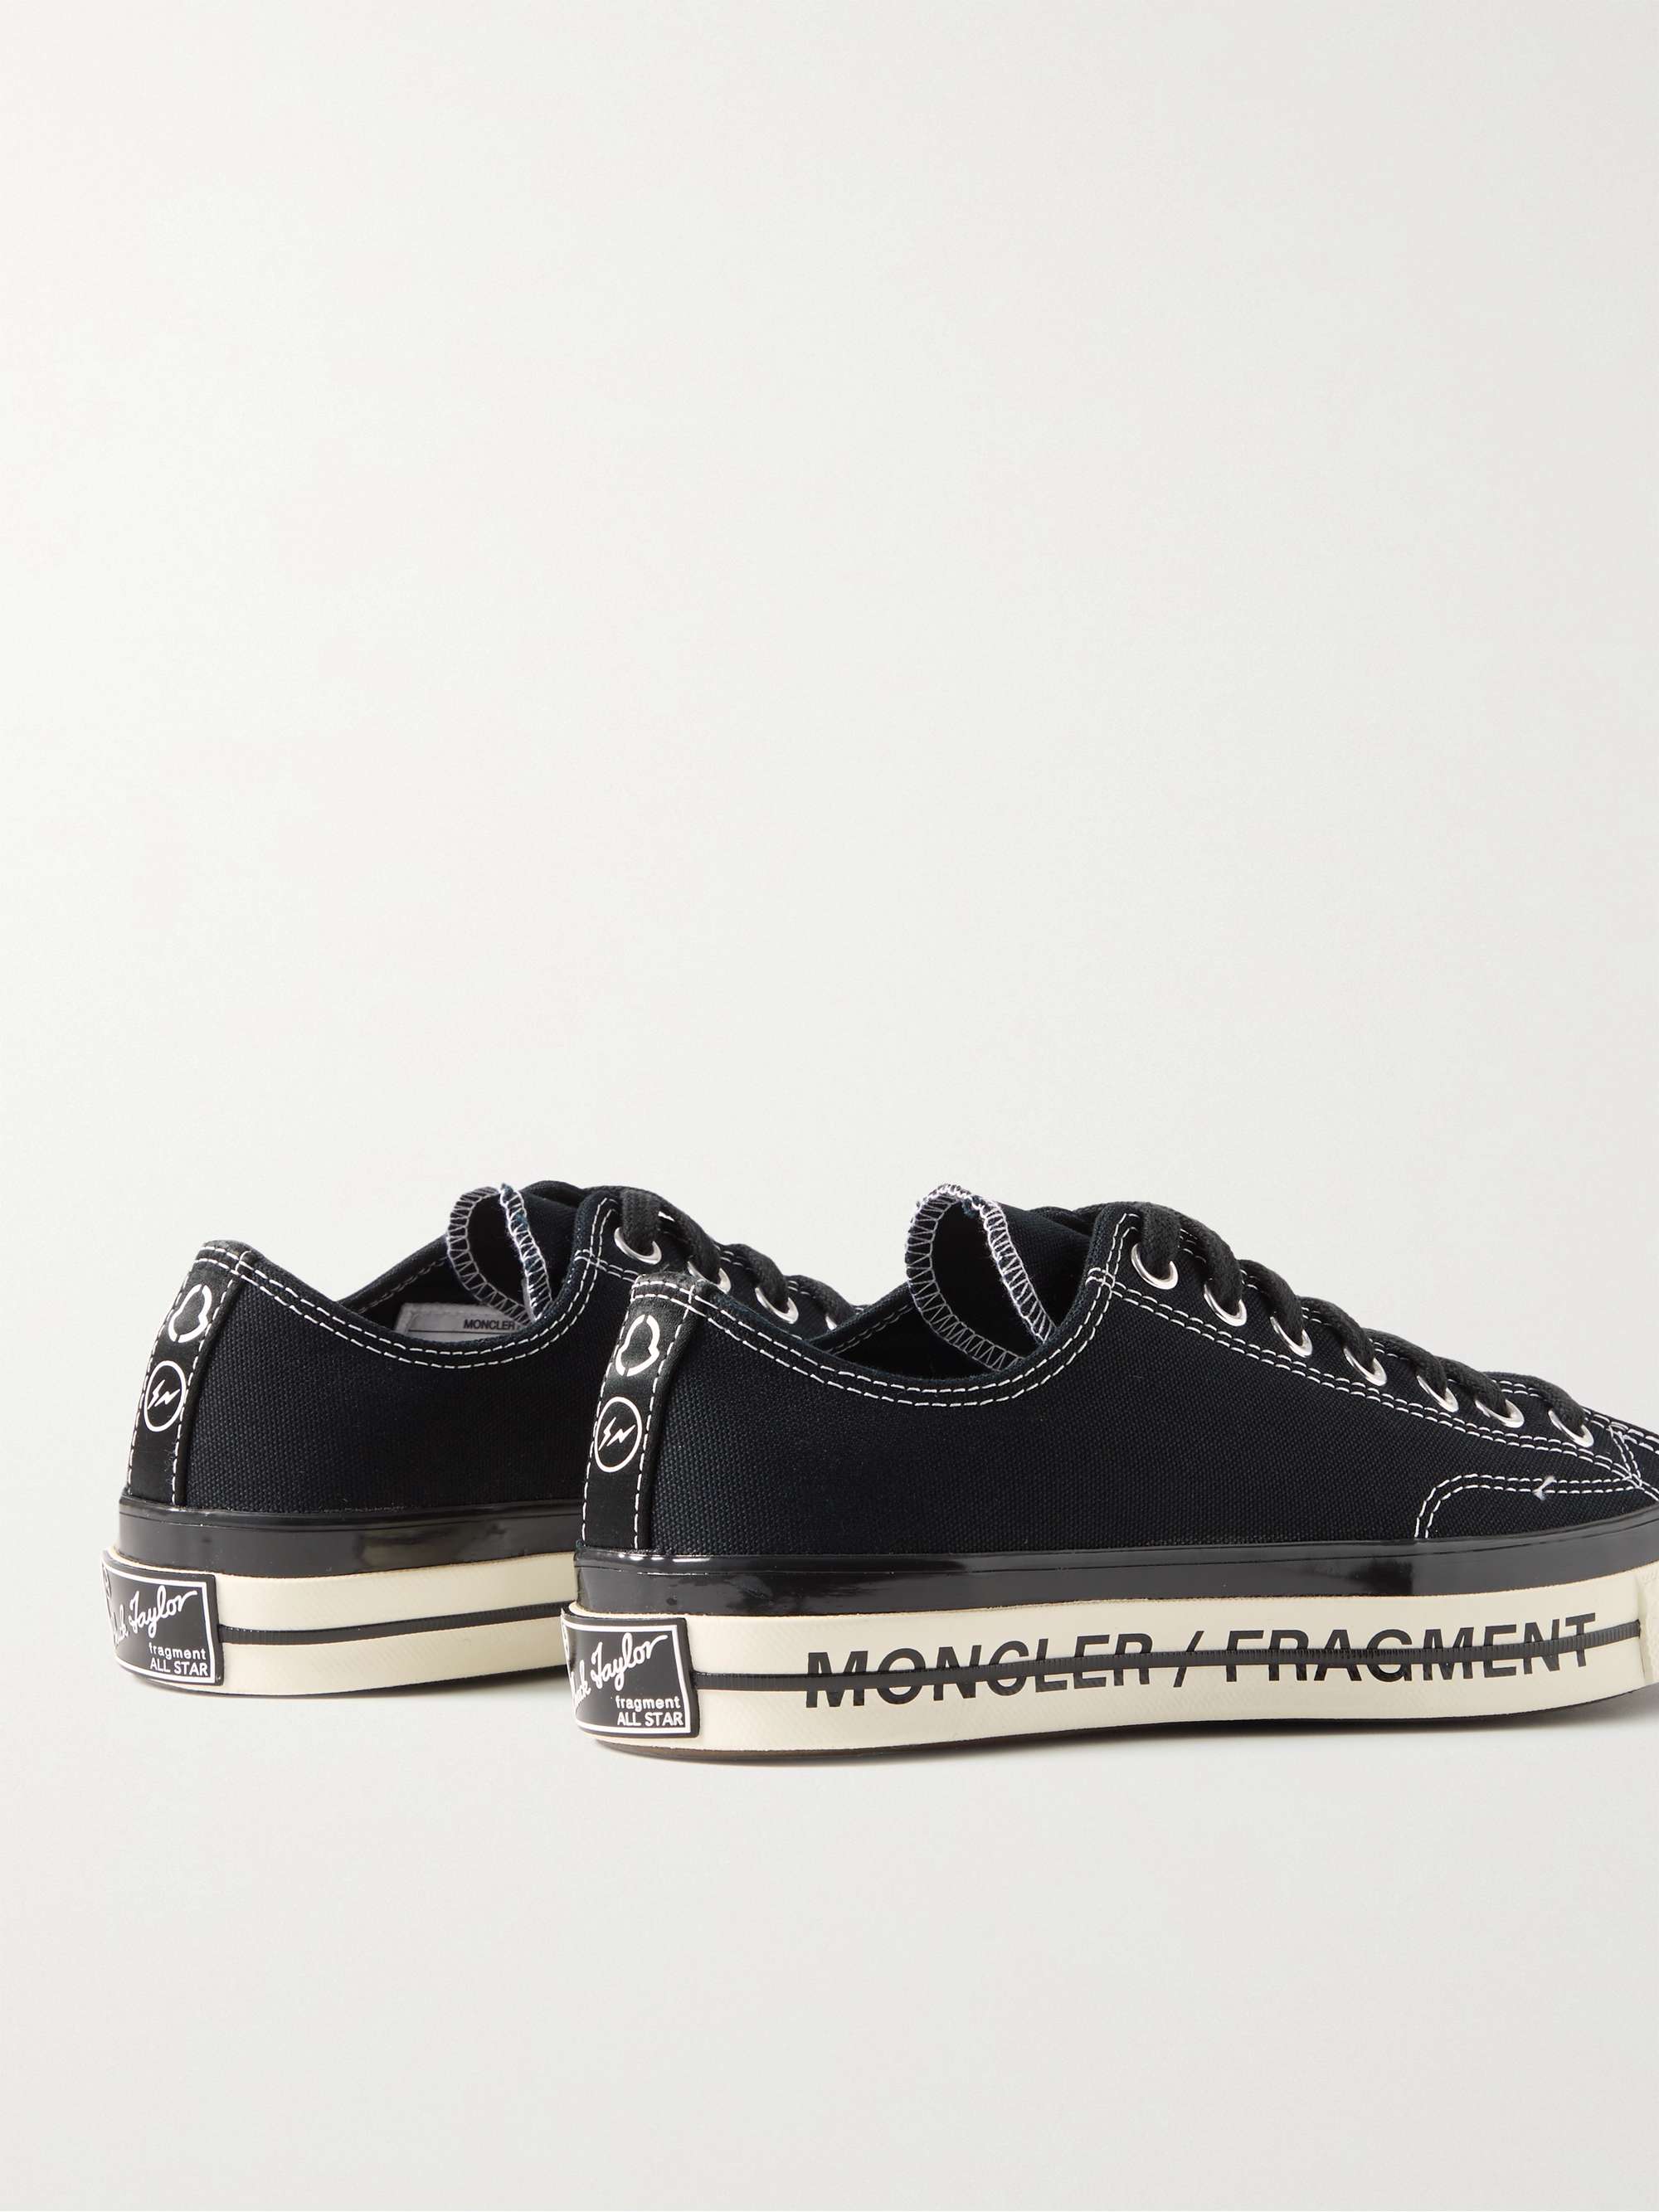 MONCLER + Converse 7 Moncler Fragment Fraylor III Canvas Sneakers